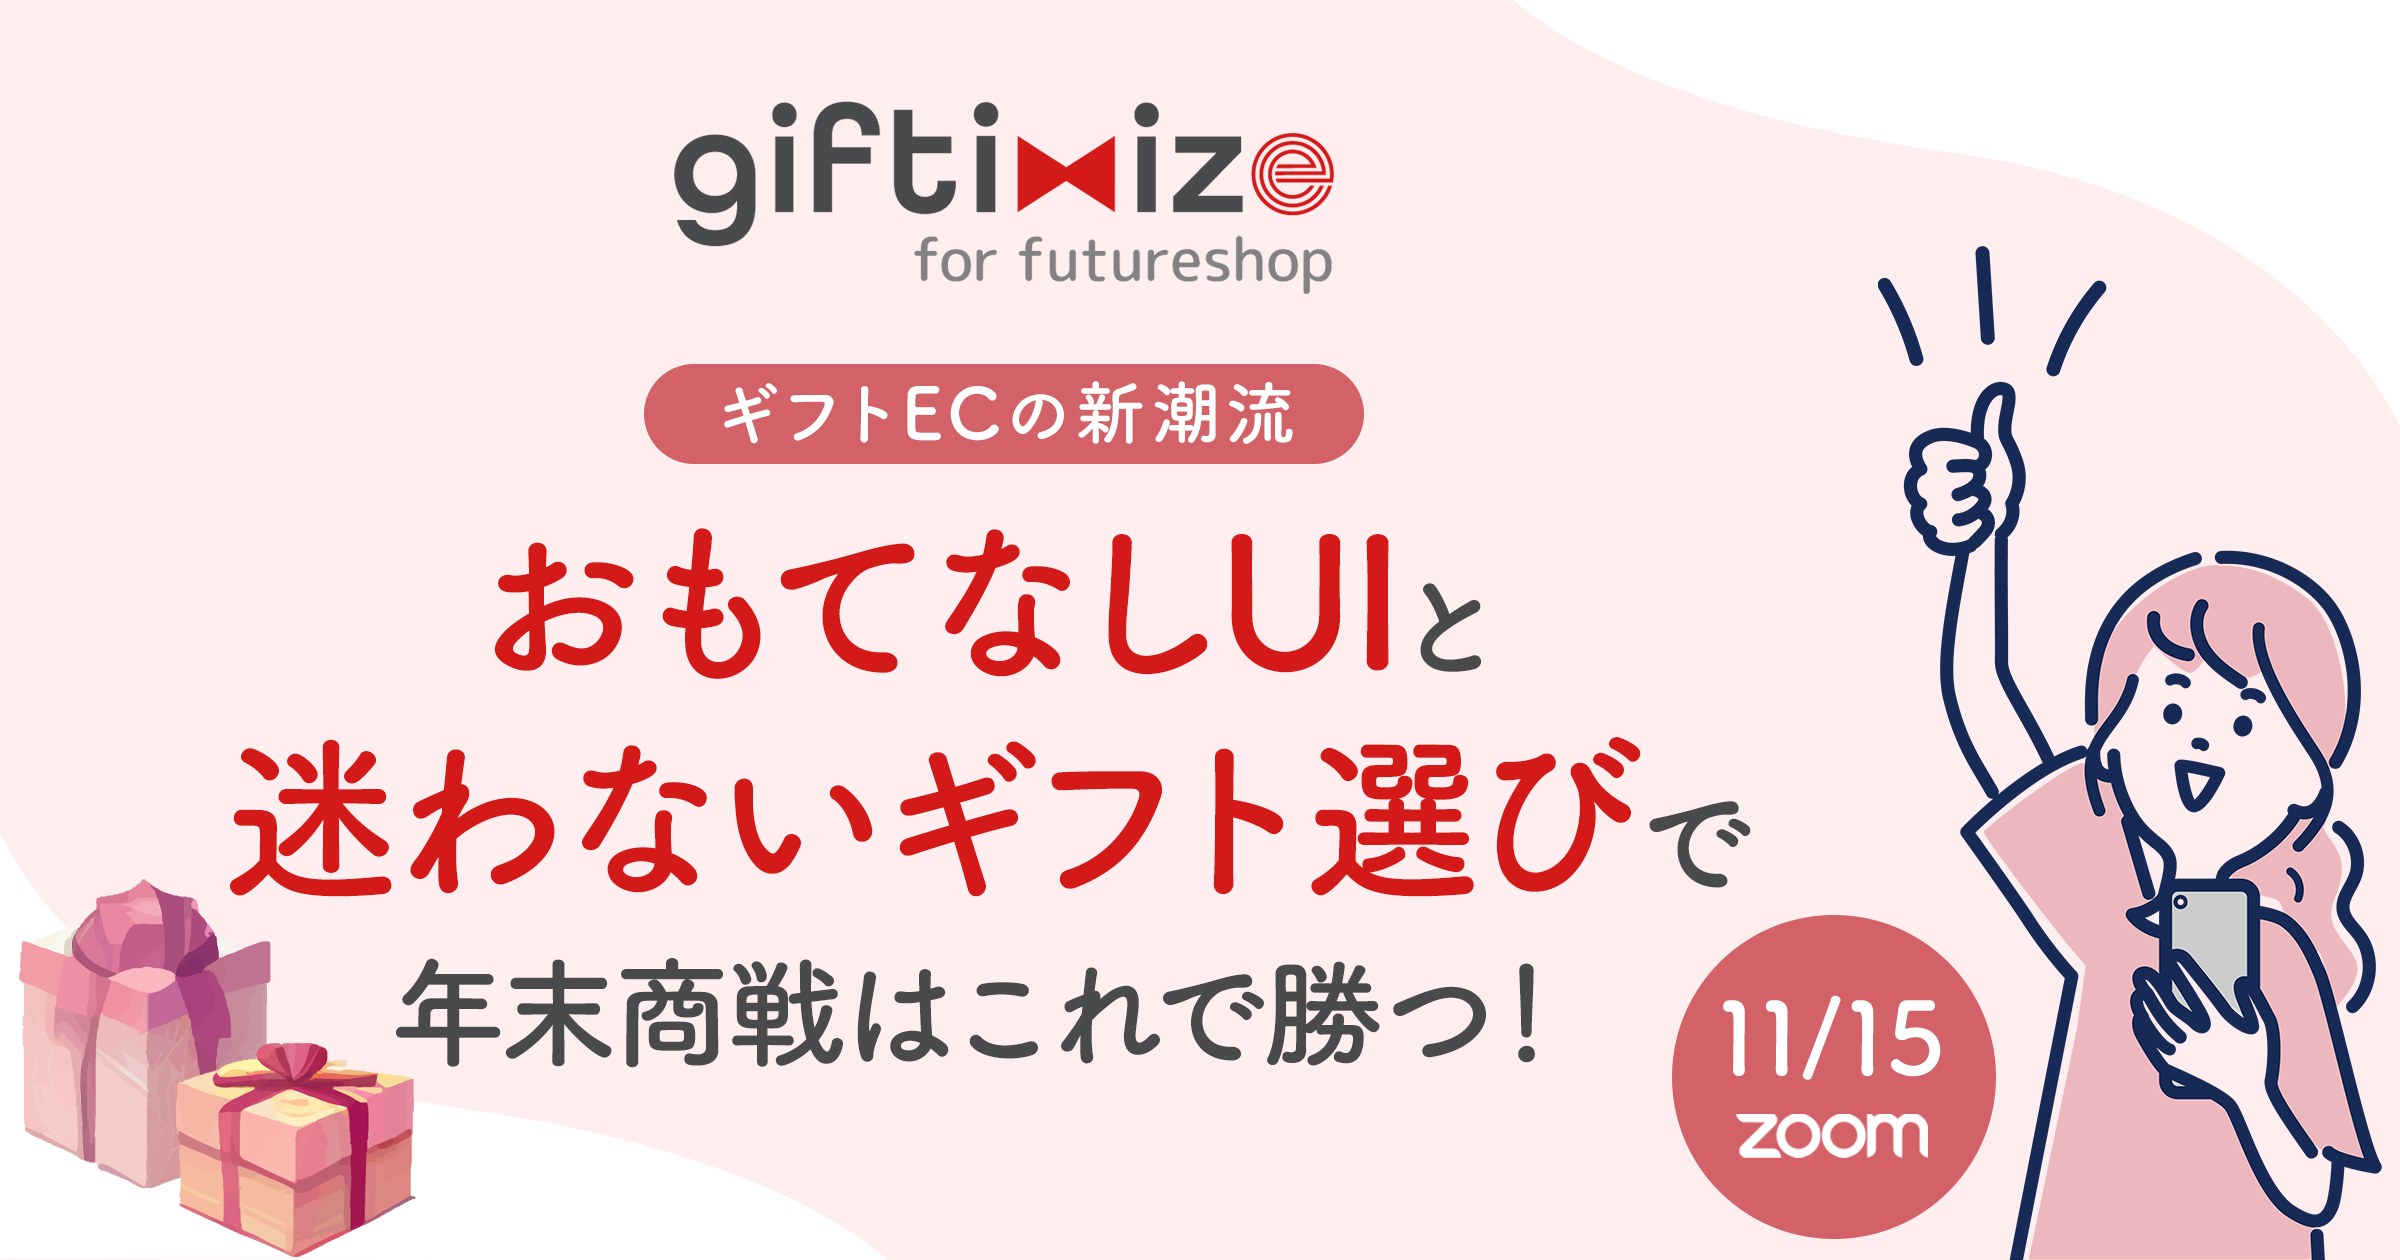 giftimize for futureshop 〜ギフトECの新潮流〜おもてなしUIと迷わないギフト選びで年末商戦はこれで勝つ！